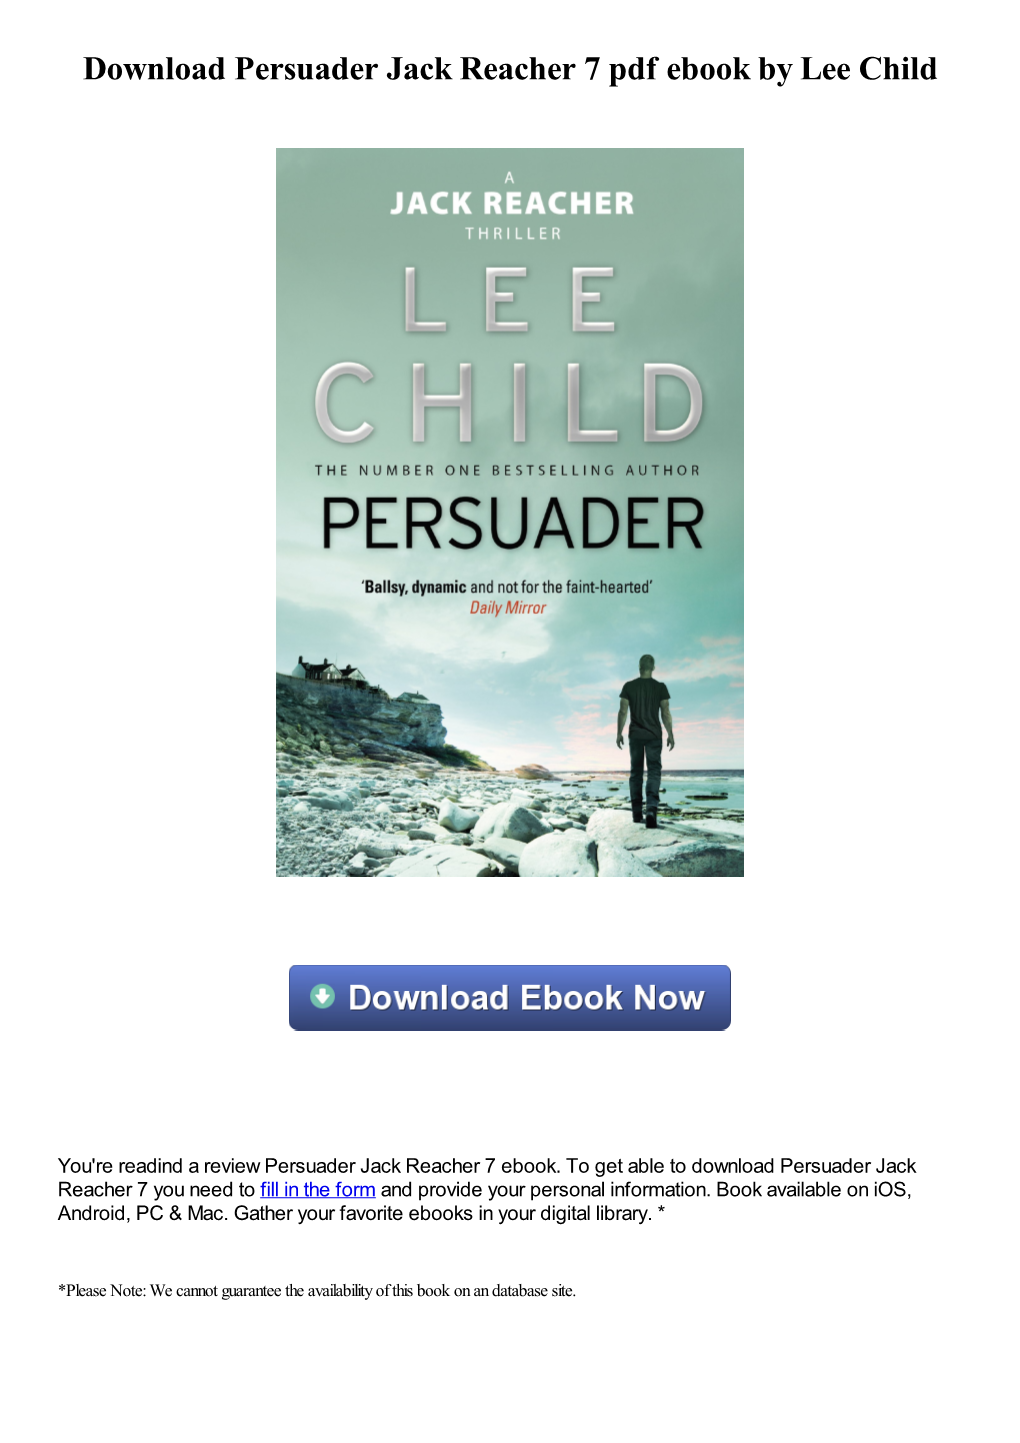 Download Persuader Jack Reacher 7 Pdf Ebook by Lee Child